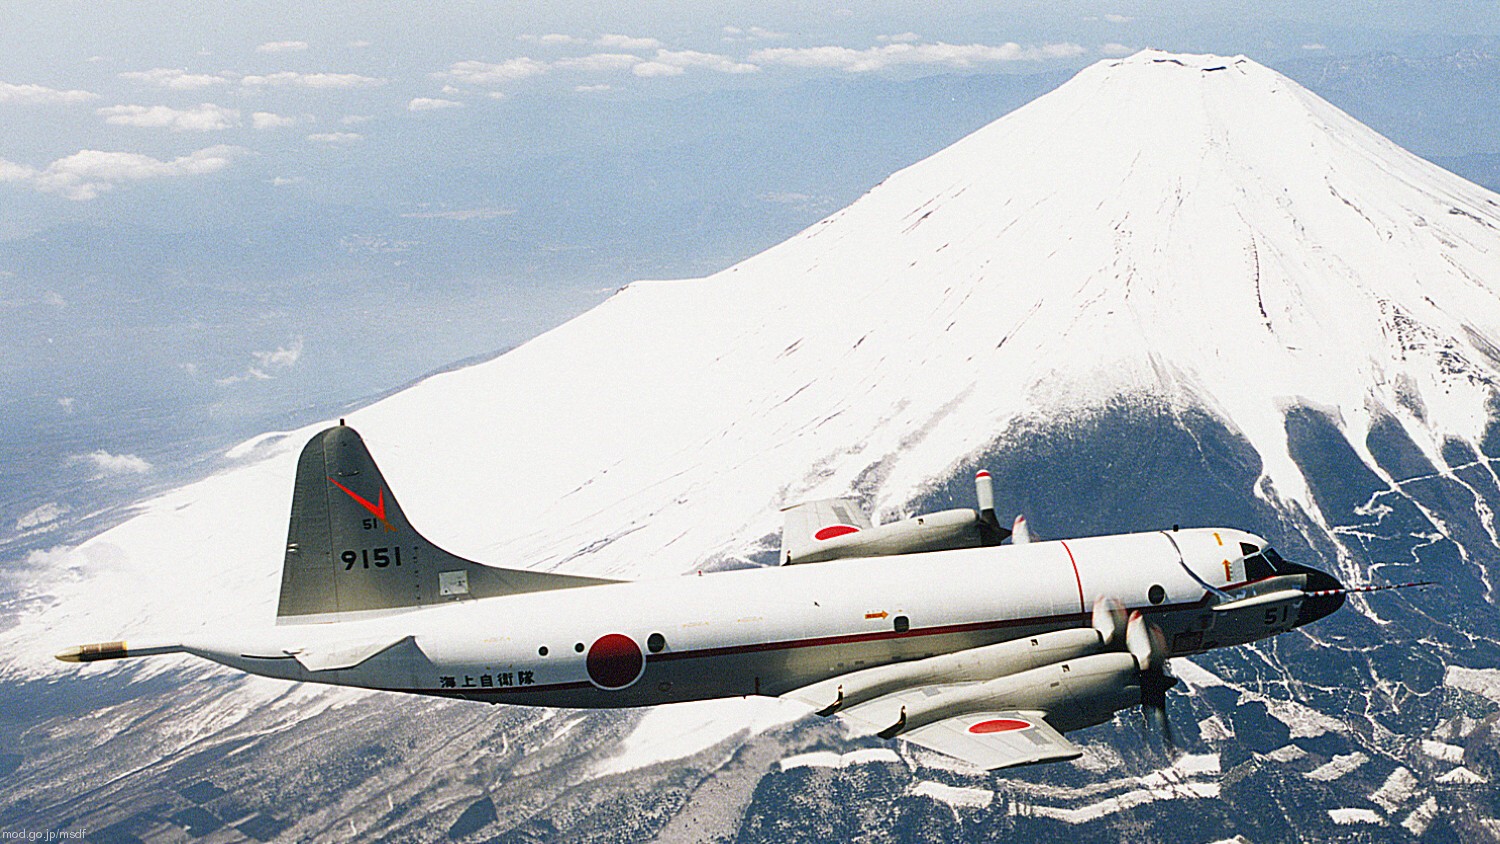 kawasaki up-3c orion equipment testing aircraft japan maritime self defense force jmsdf 9151 05